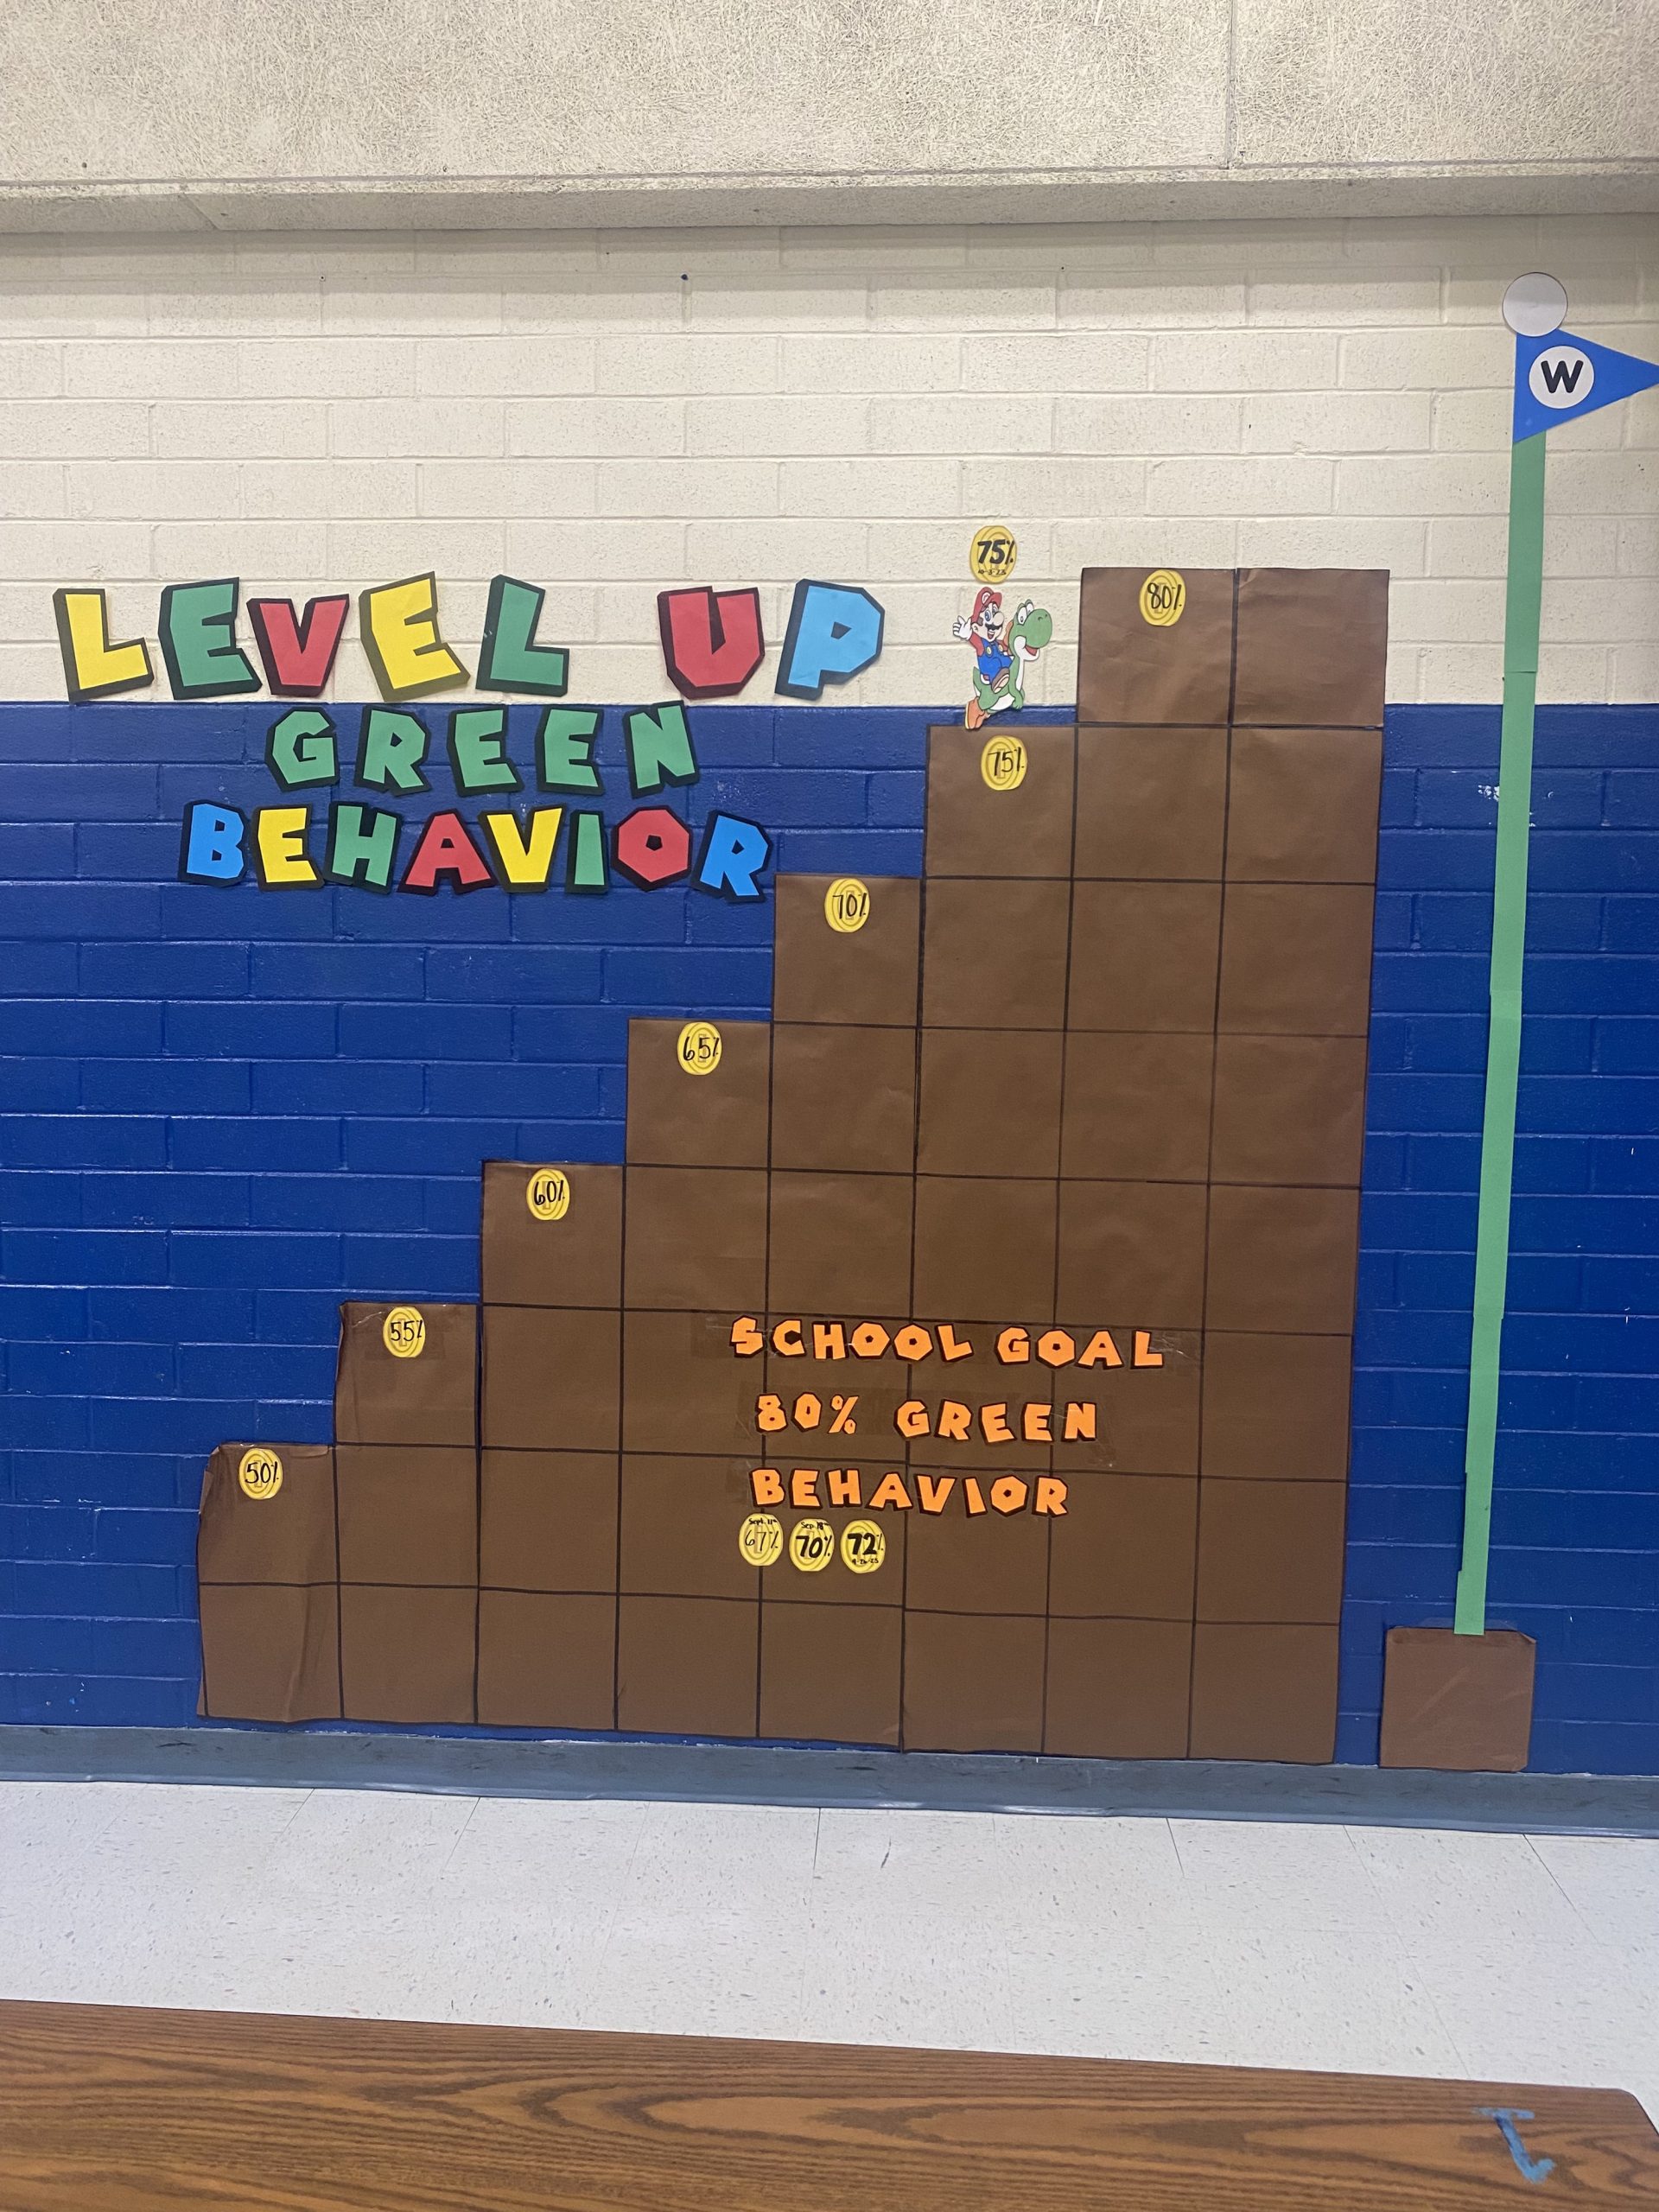 Our Mario-themed school behavior scoreboard on the lunchroom wall